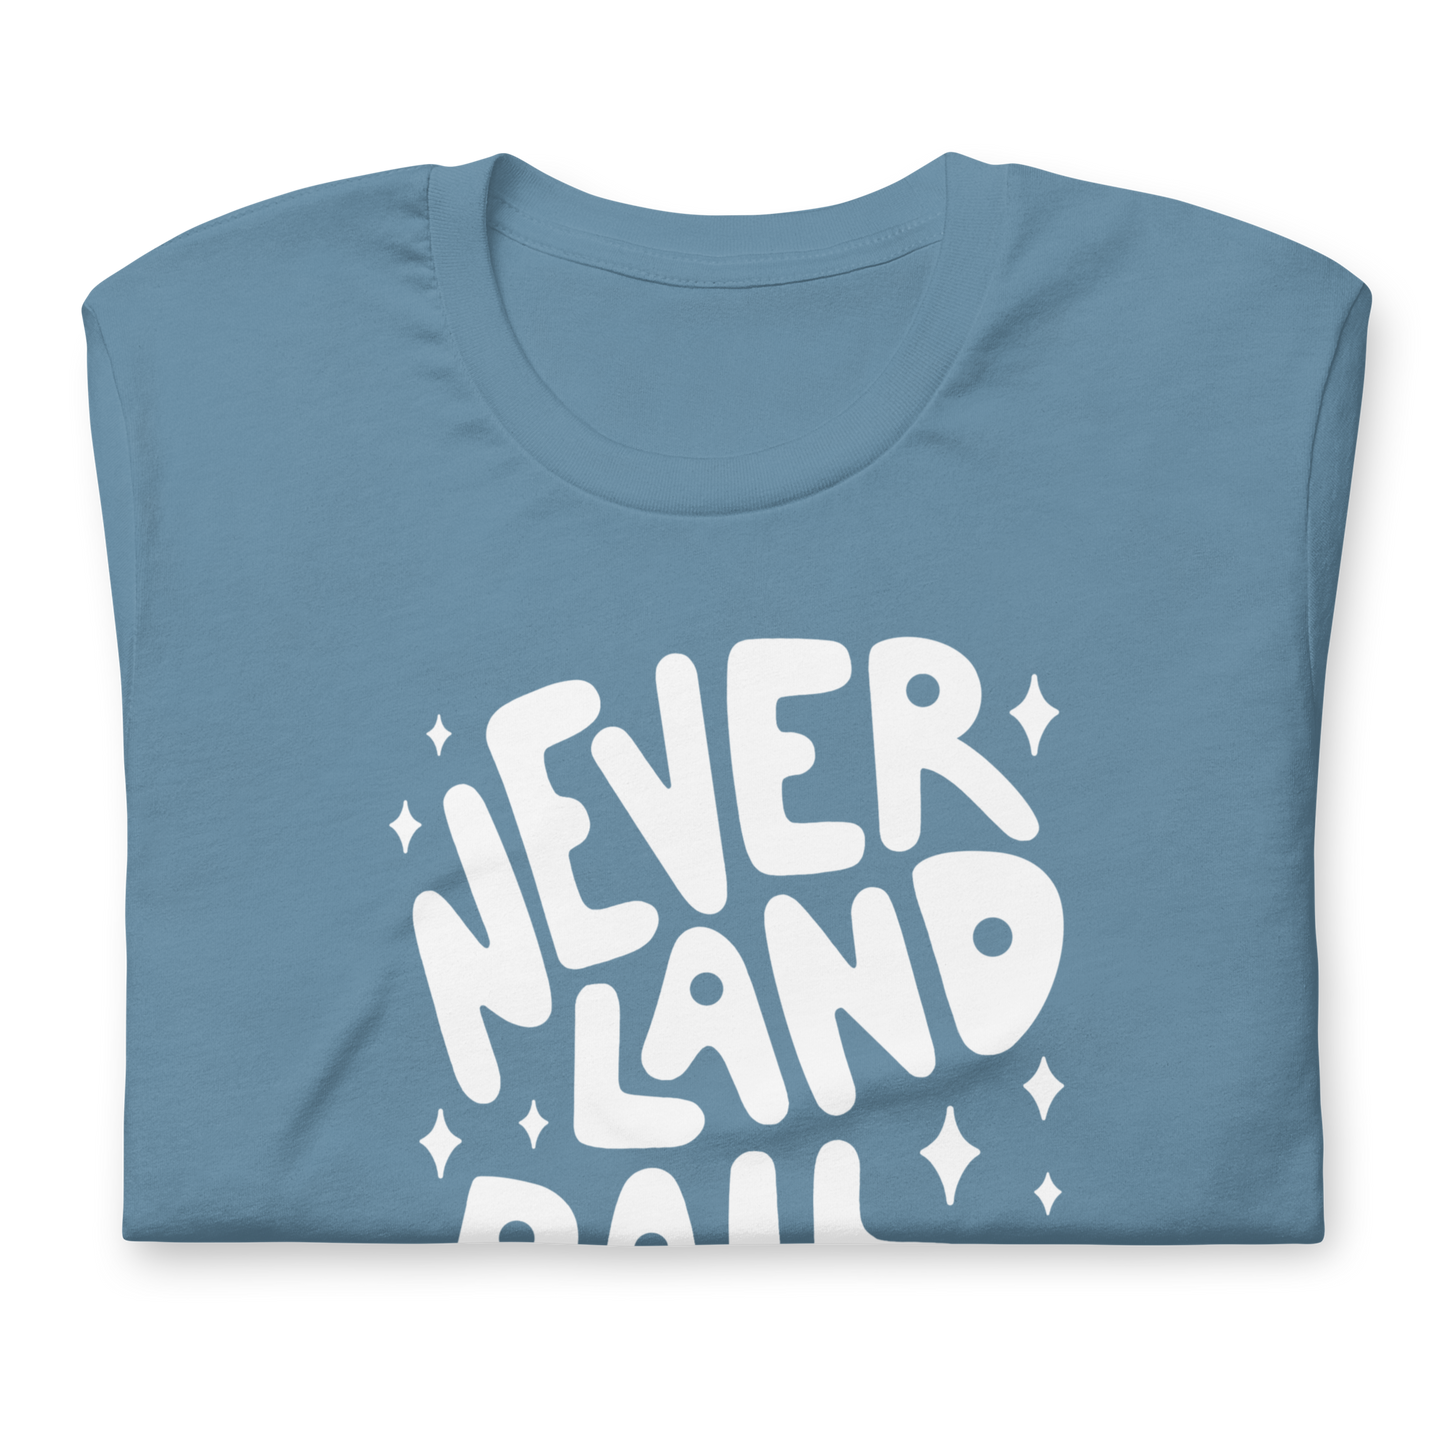 Neverland shirt